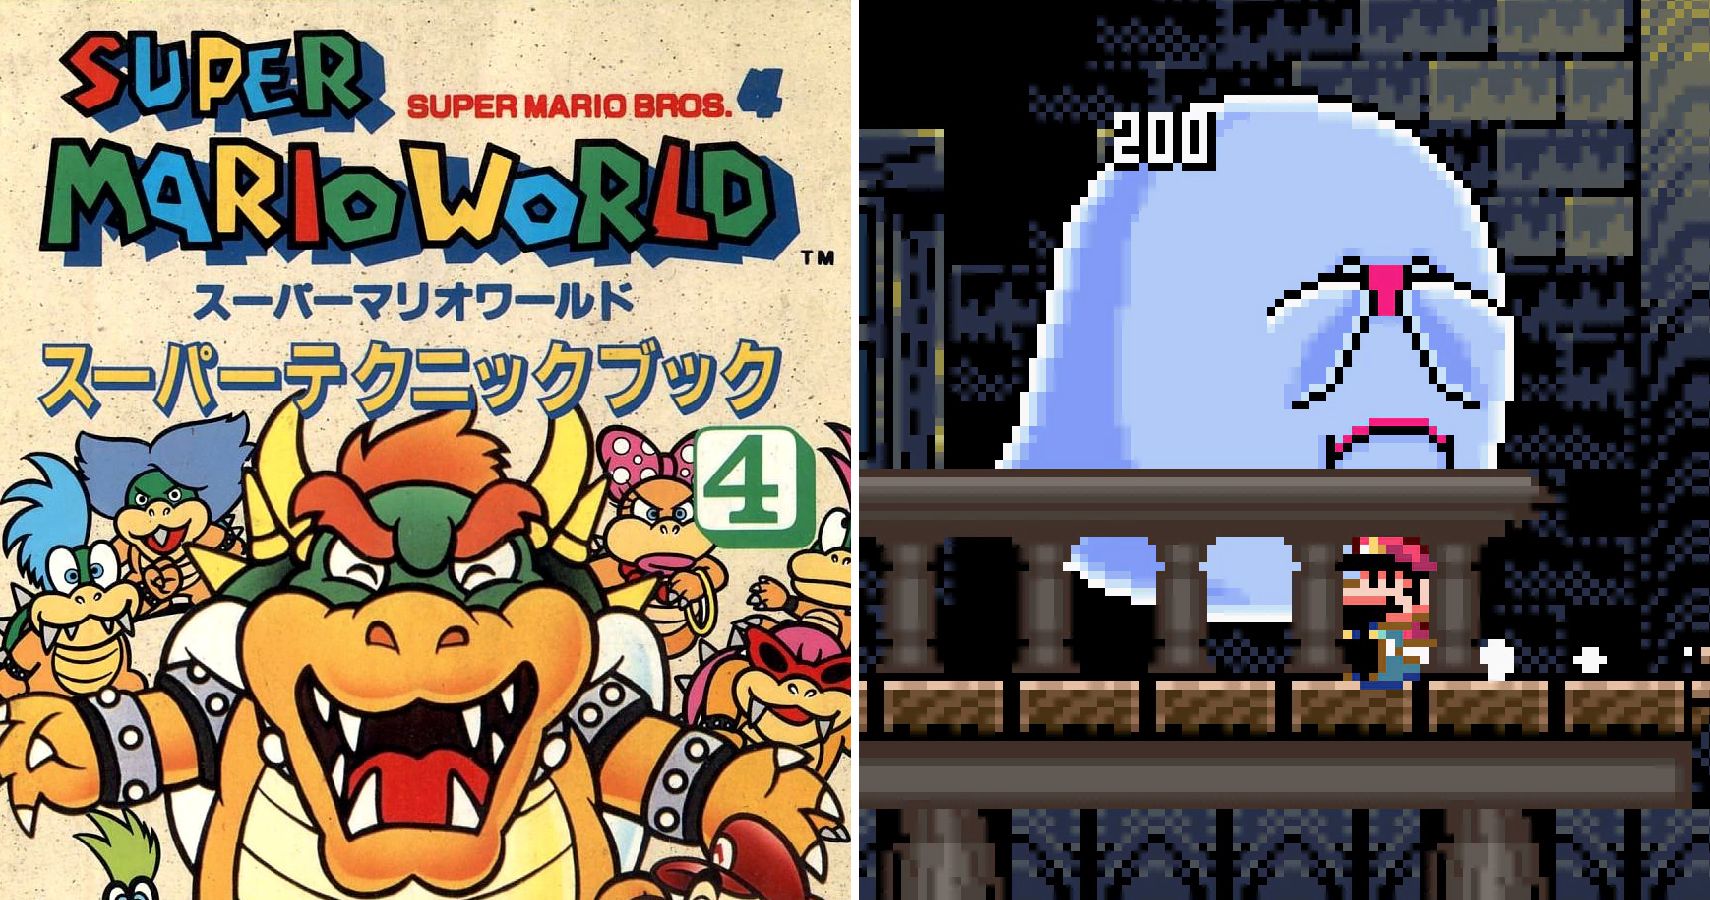 Mario world 4. Super Mario Snes. Super Mario World Snes. Super Mario World: super Mario Bros. 4. Super Mario World 1990.